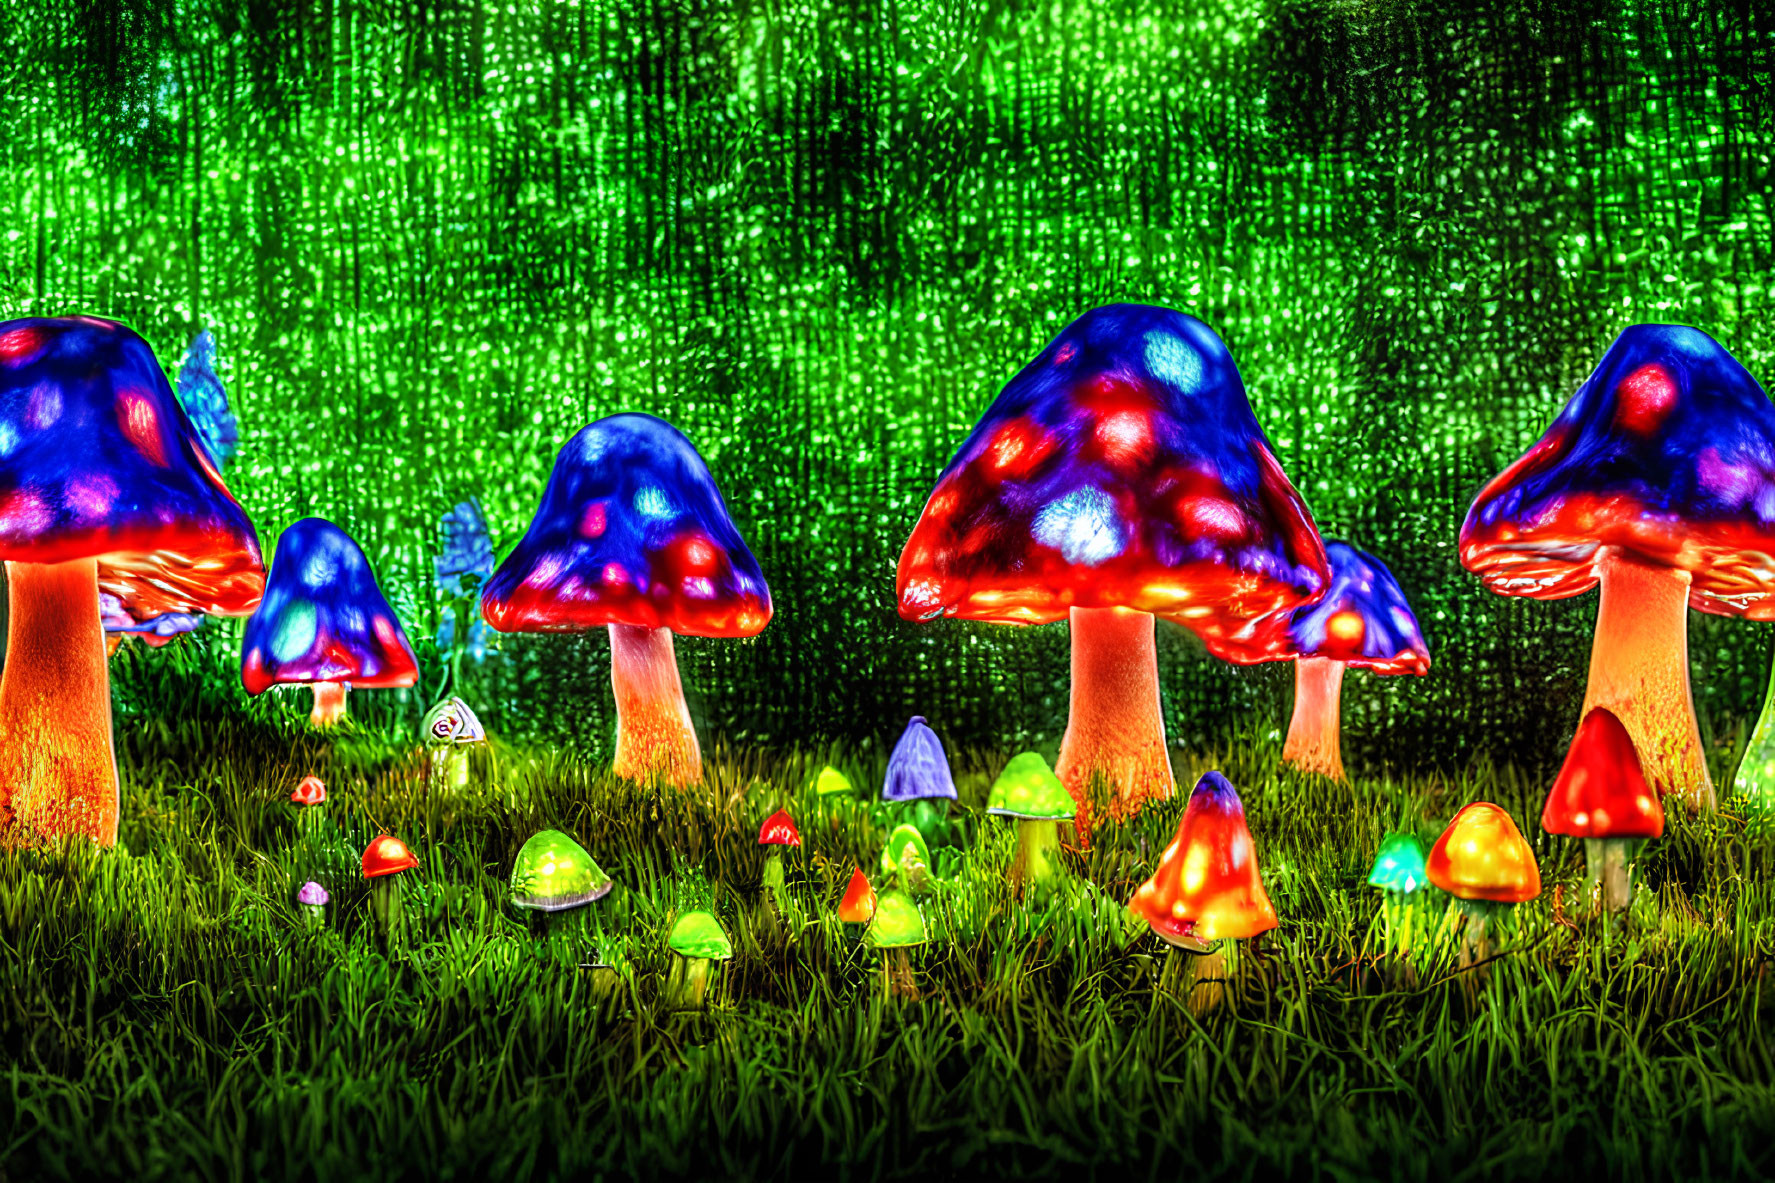 Colorful Luminous Mushrooms on Grass with Matrix-Like Digital Background